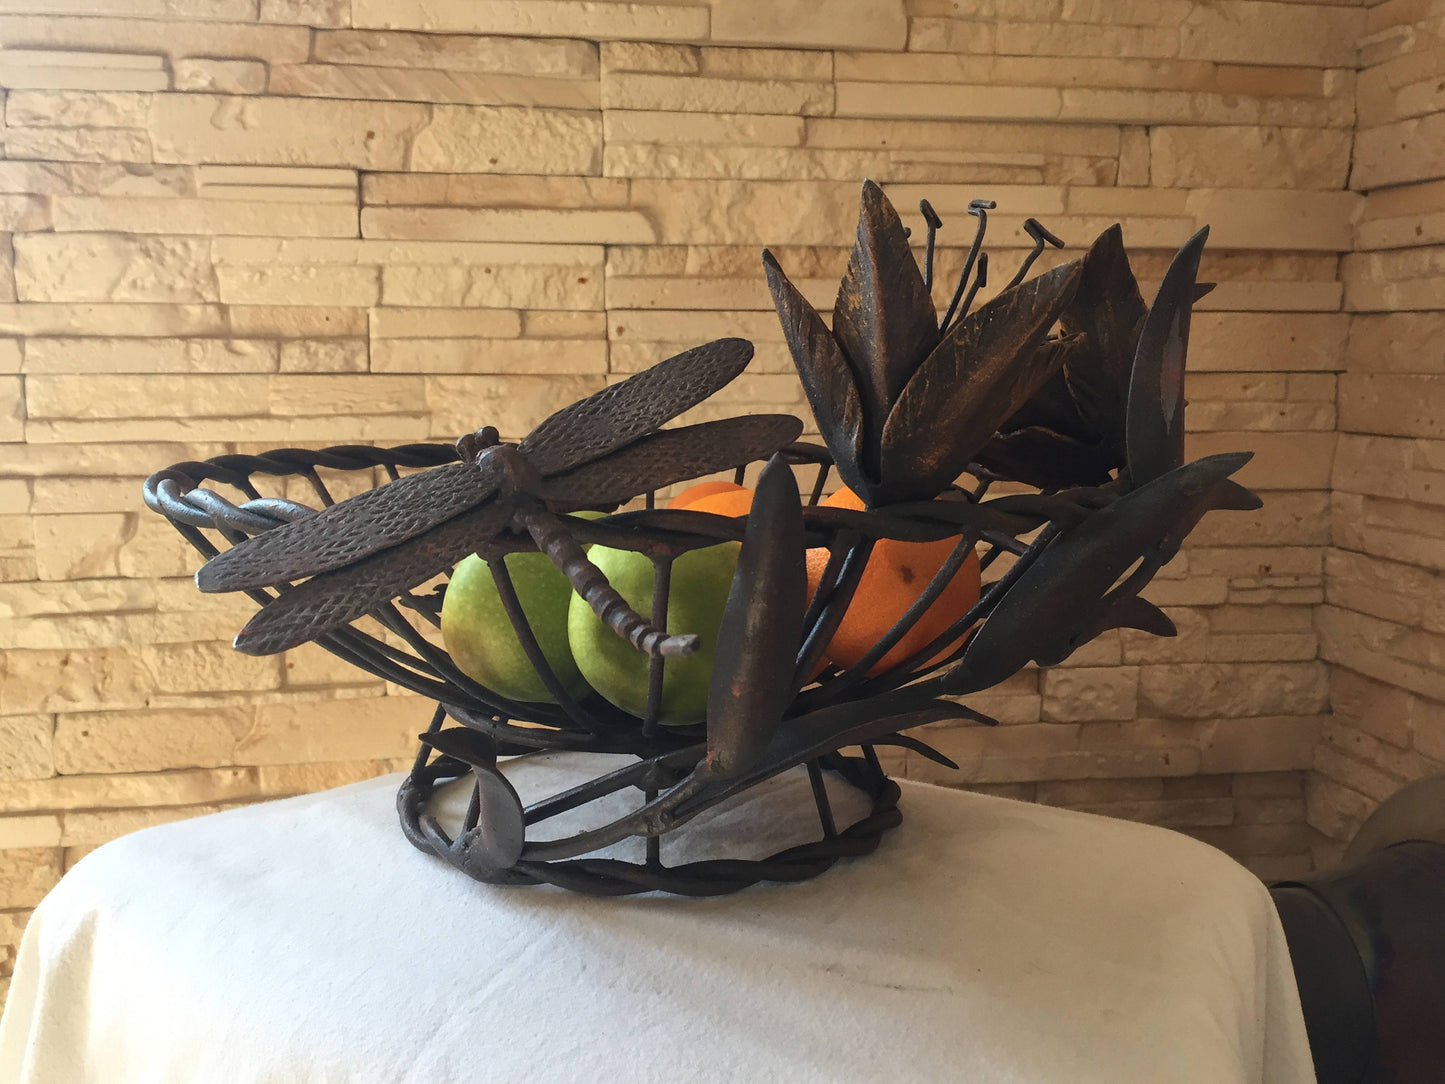 Fruit plate, metal fruit bowl, veggie tray, vegetable tray, fruit tray, fruit holder,kitchen basket,eggs basket, picnic, BBQ, lily, scorpion